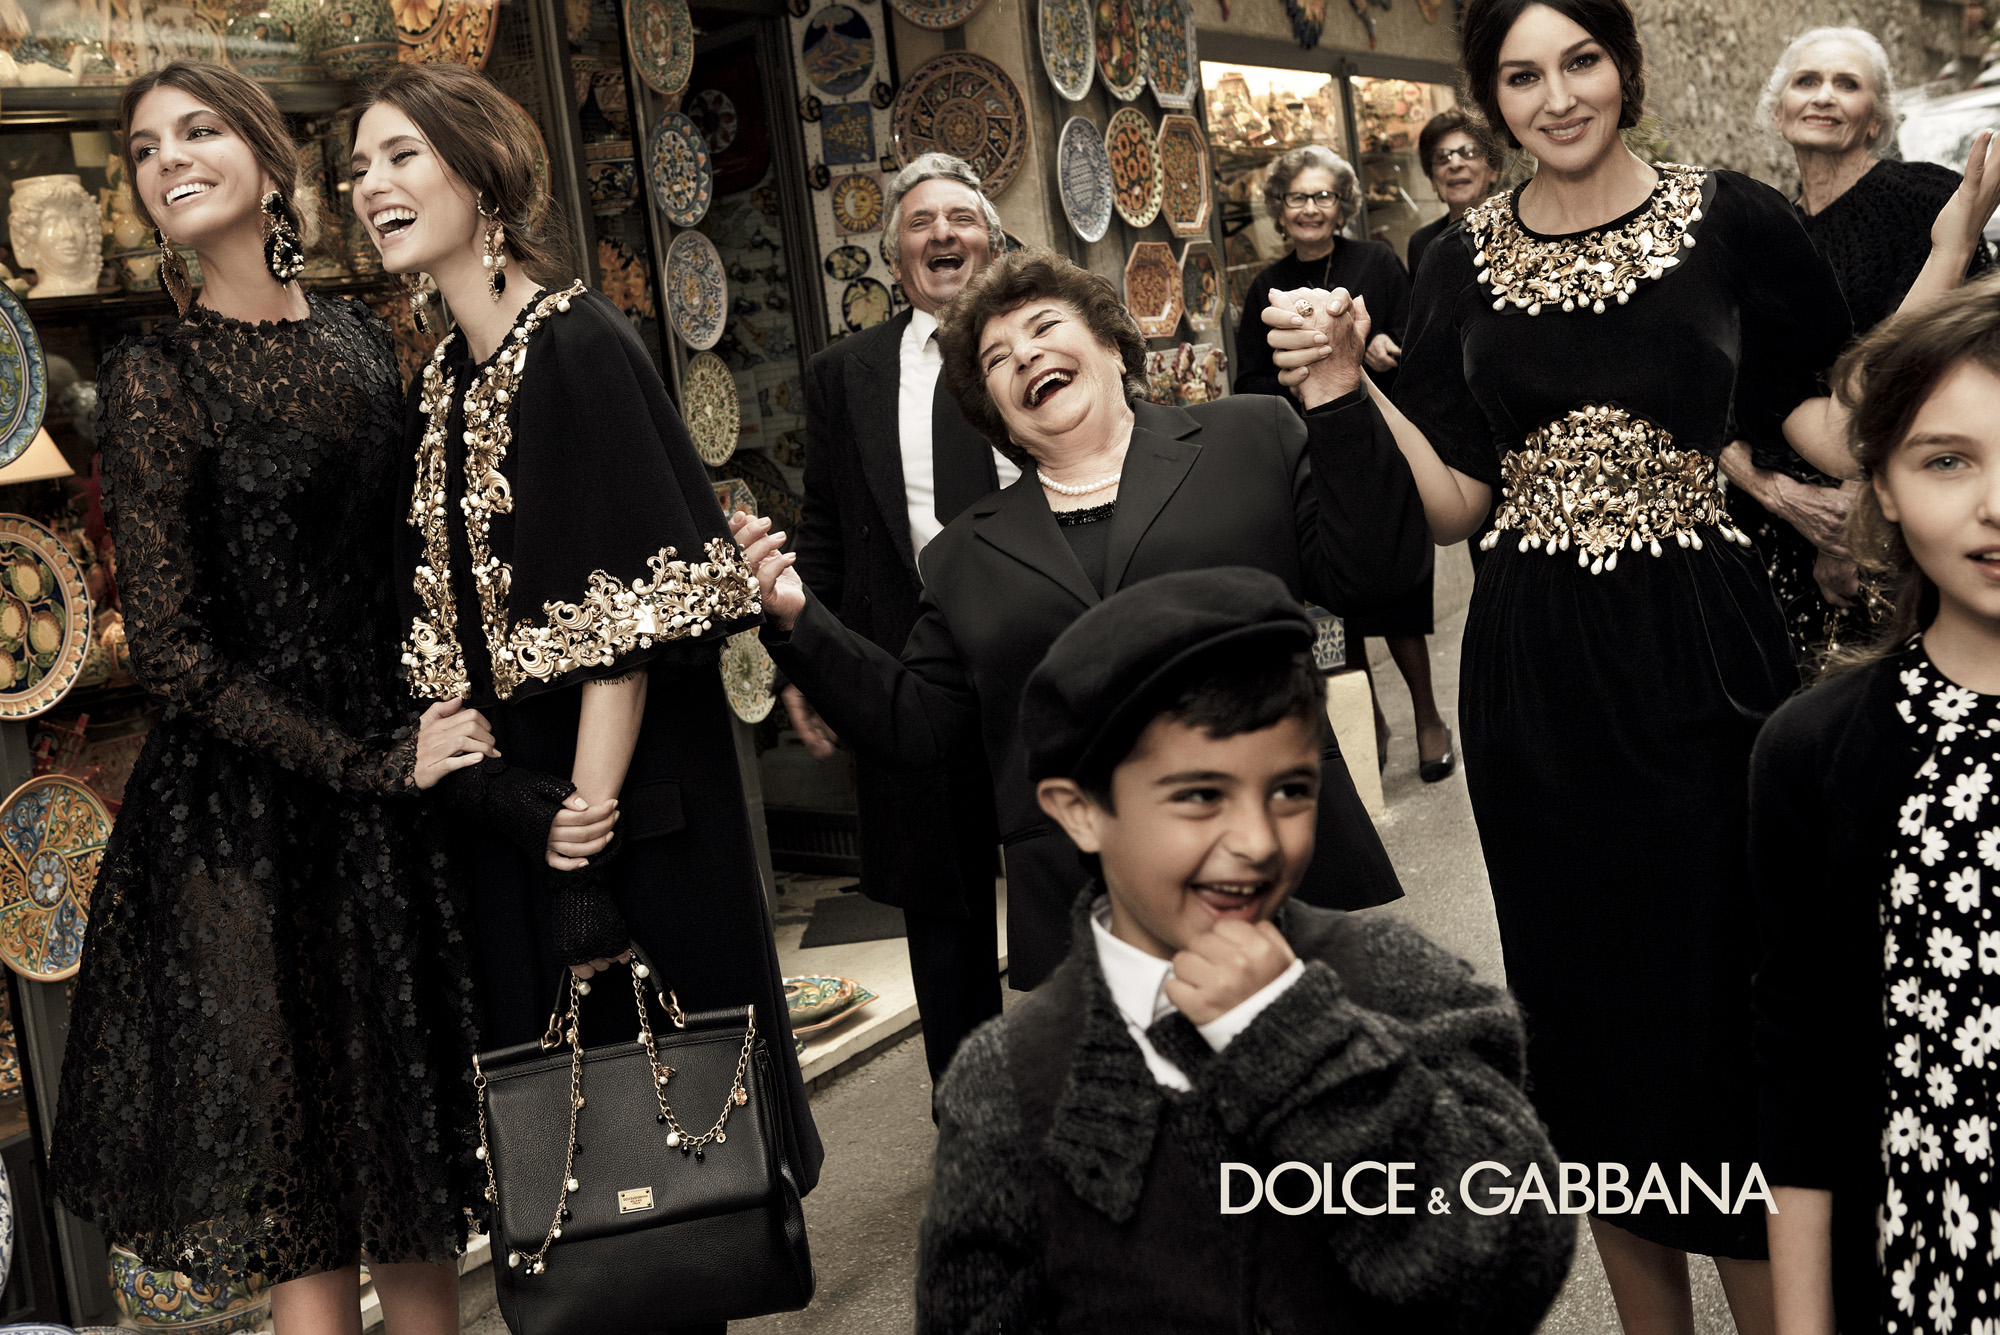 dolcegabbana-dg-fall-winter-2013-full-print-ad-campaign-italy-taormina-sicily-woman-fashion-photography-giampaolosgura-runway-womanswear-baroque-feminine-tailoring-07.jpg